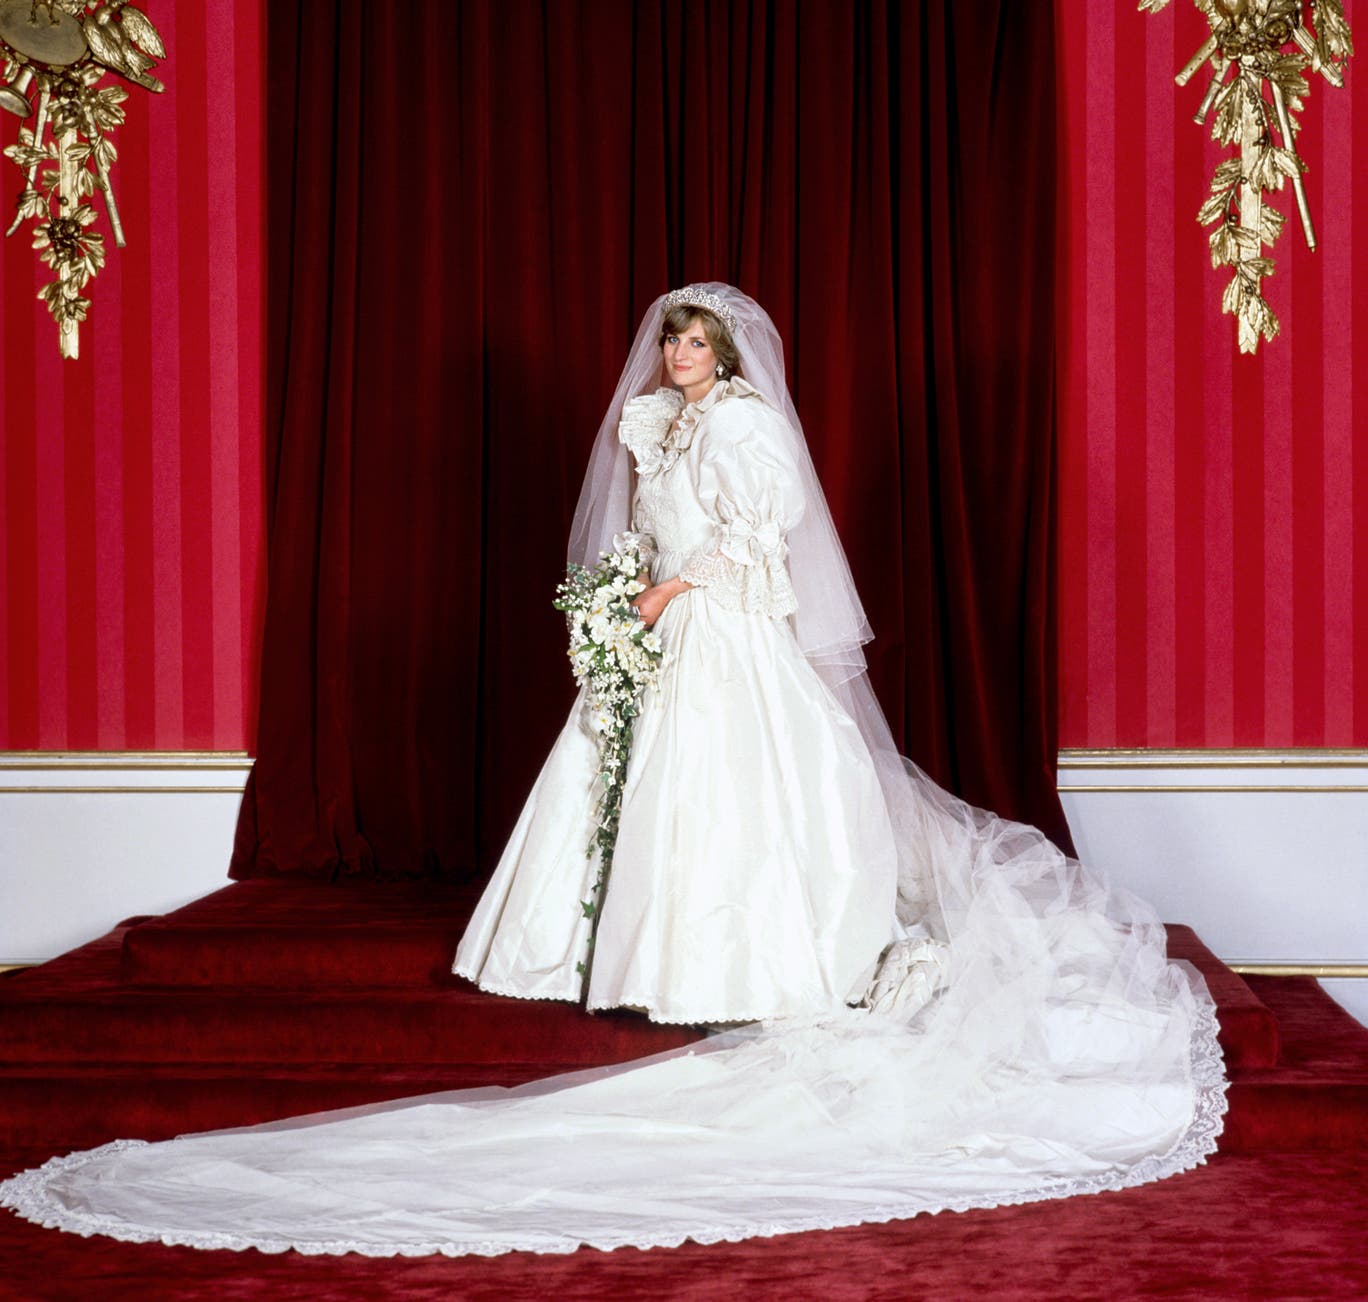 Regal Princess Diana: A Royal Style Icon! - INPAC Times